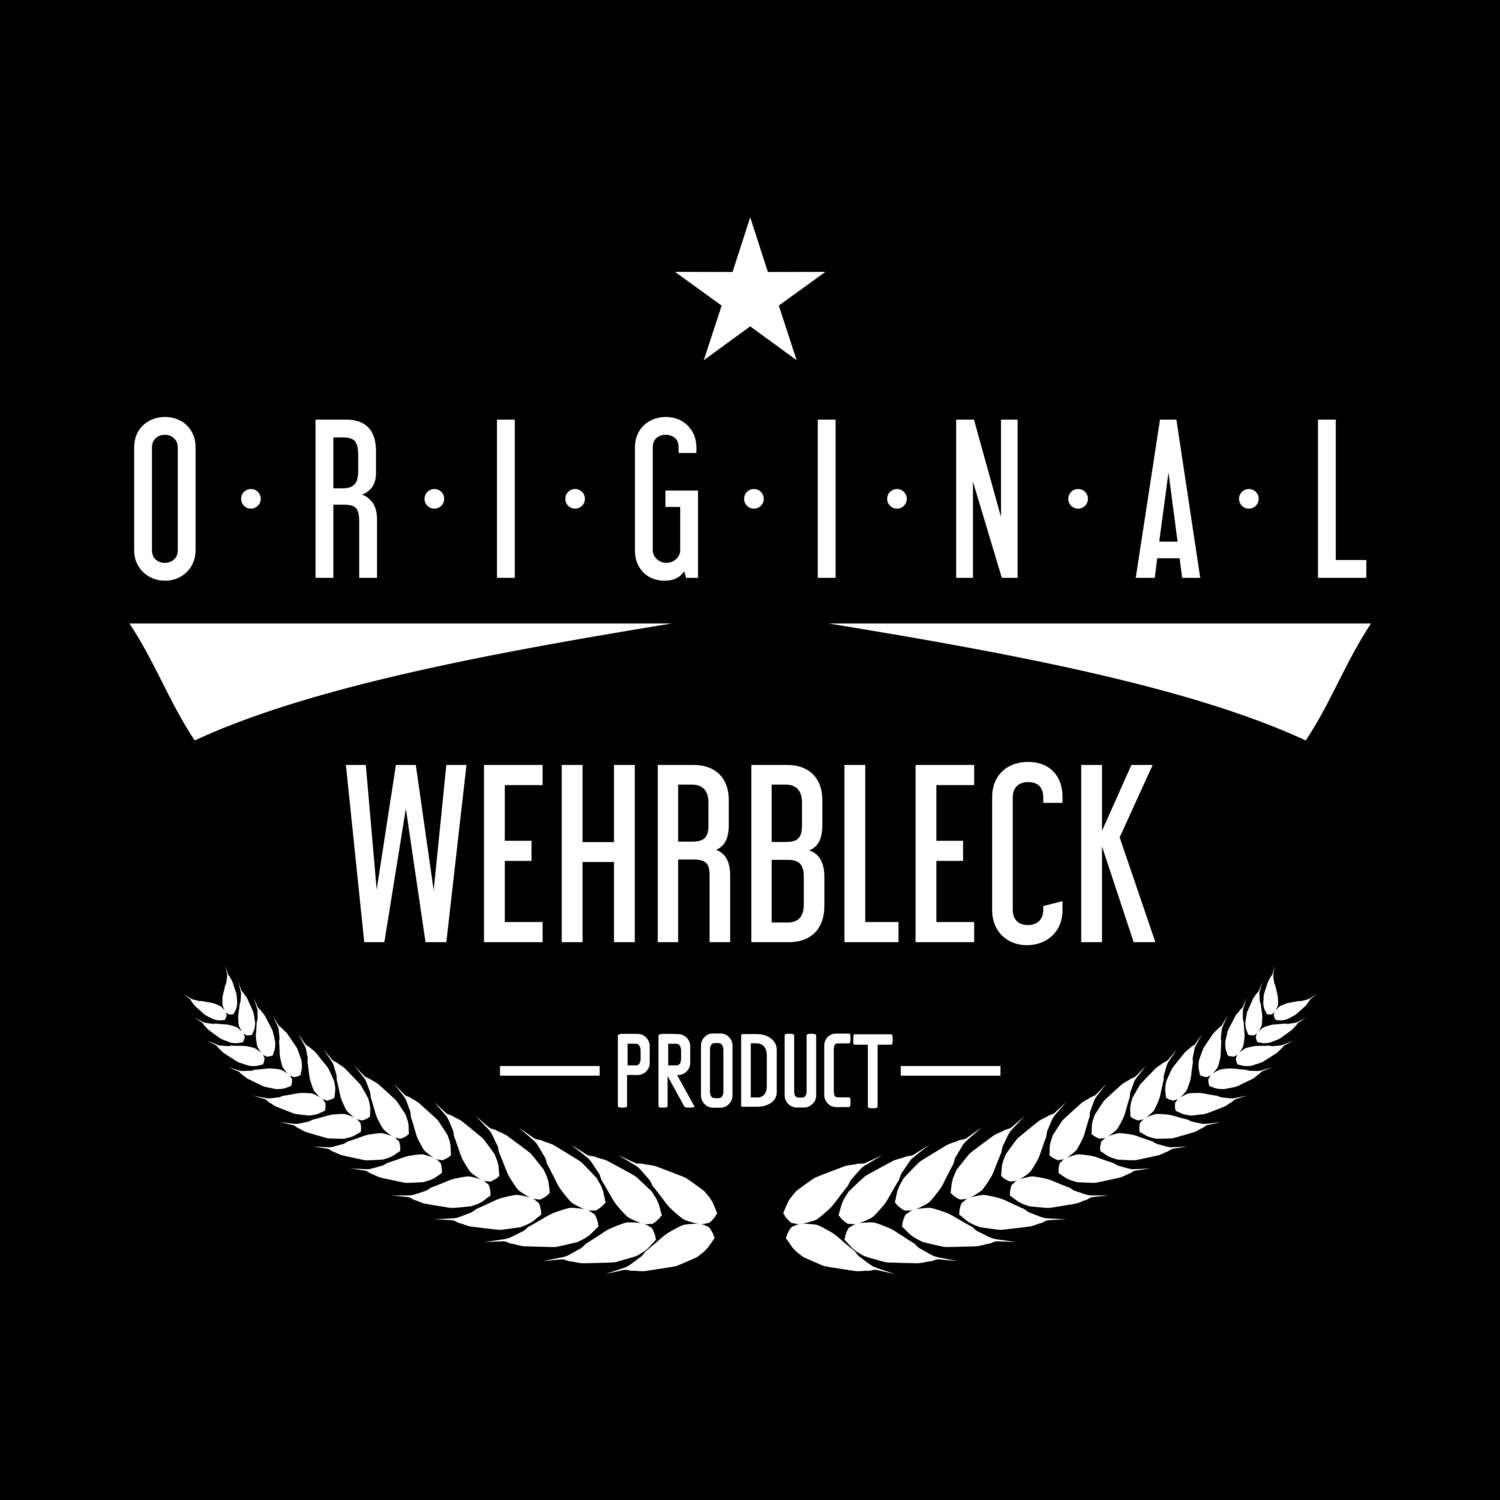 Wehrbleck T-Shirt »Original Product«